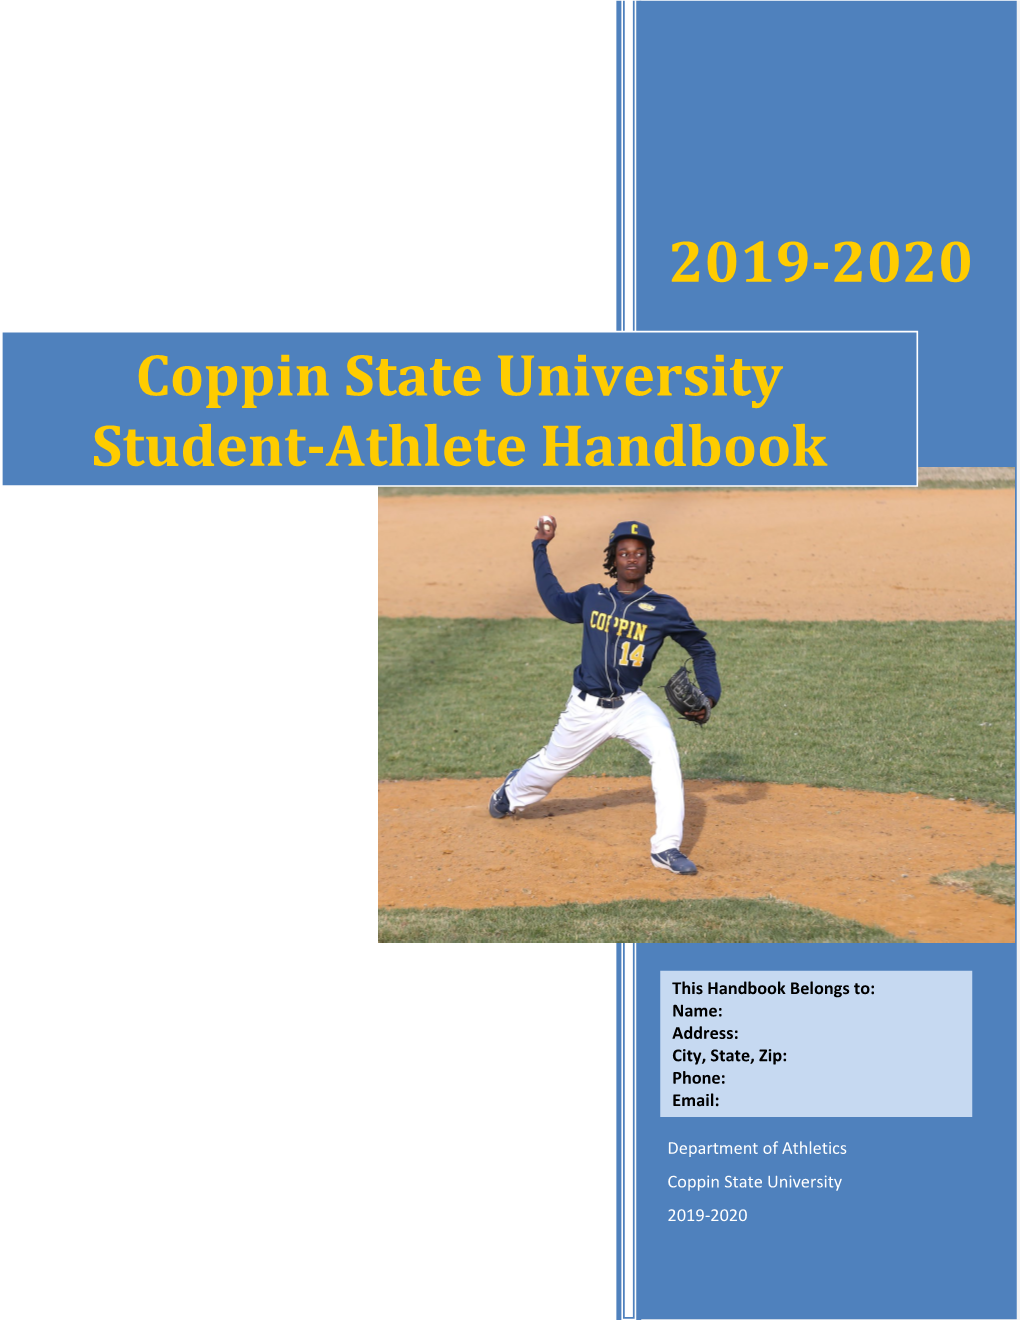 Coppin State University Student-Athlete Handbook